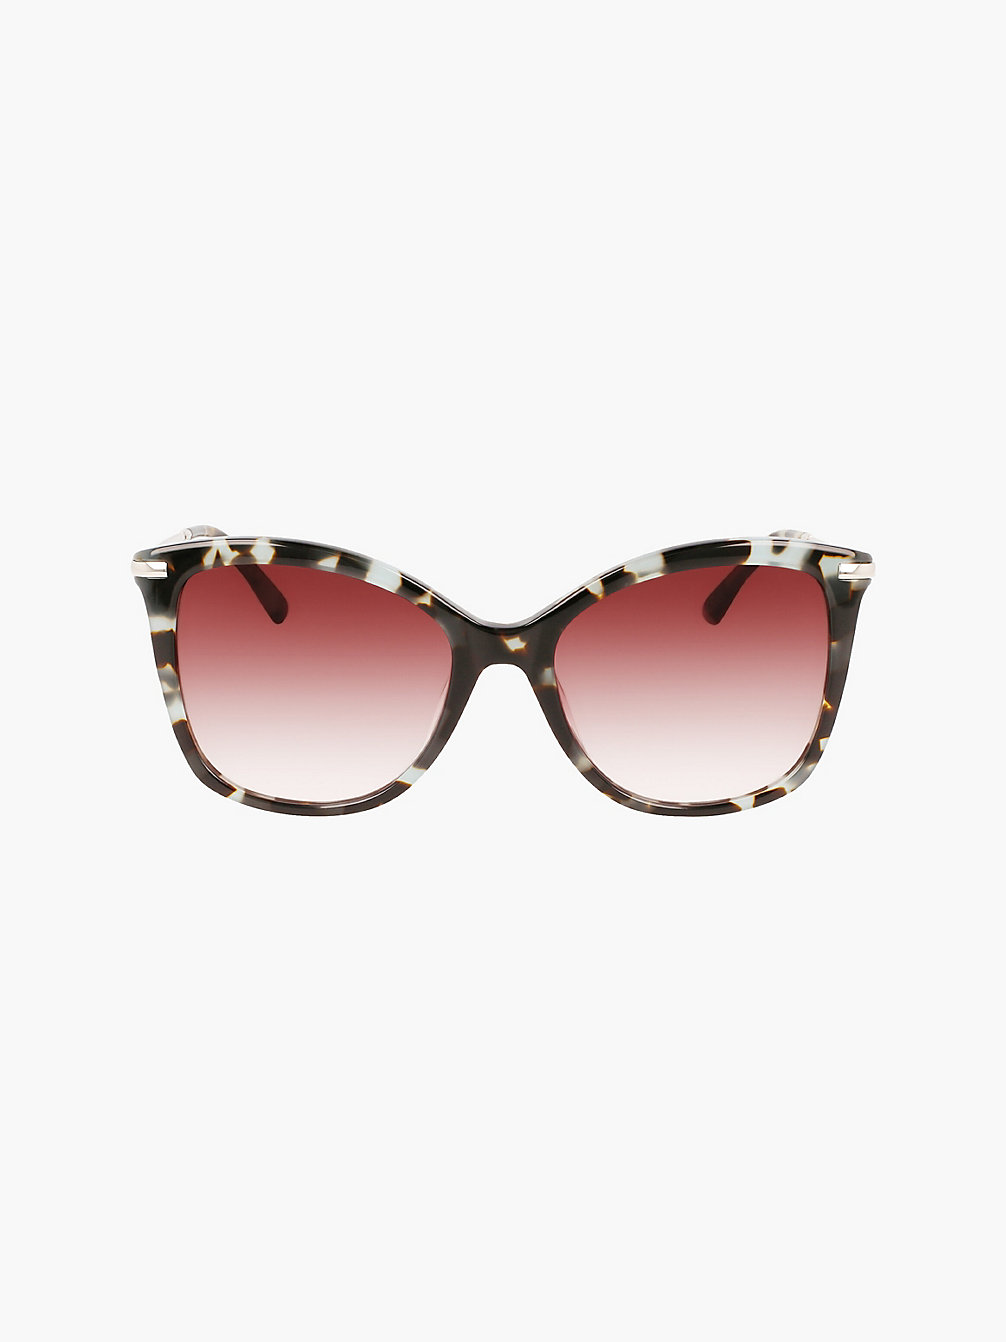 AQUA TORTOISE Butterfly Sunglasses Ck22514s undefined women Calvin Klein